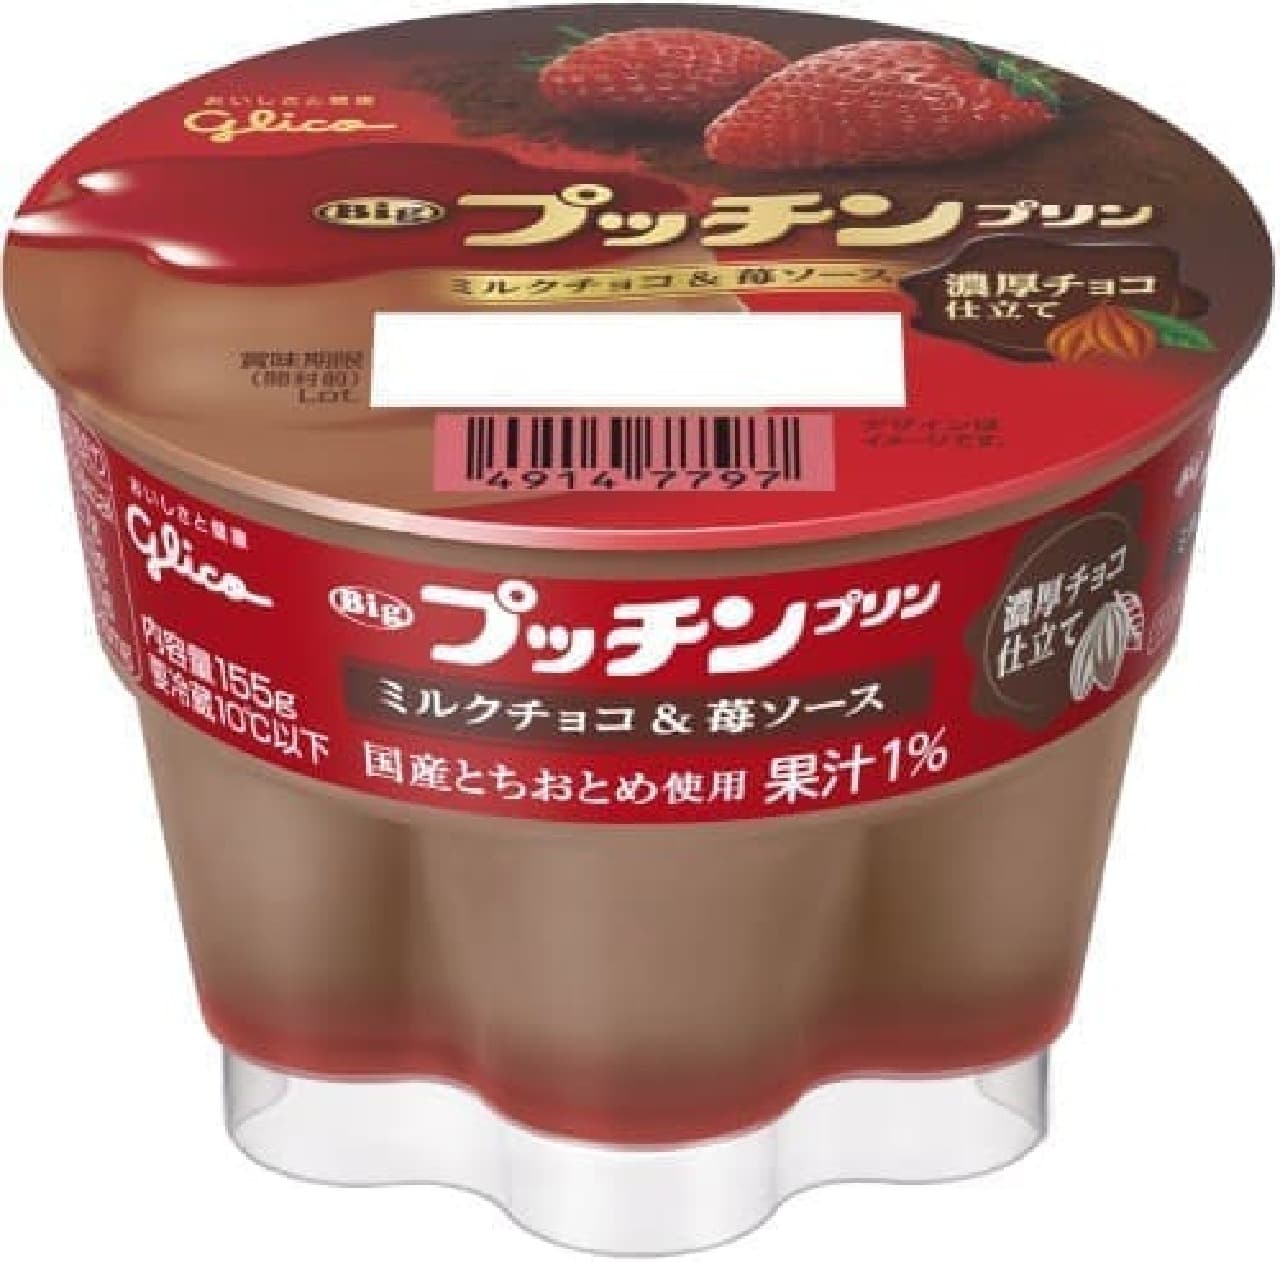 Ezaki Glico "Putchin Pudding Milk Chocolate & Strawberry Sauce"